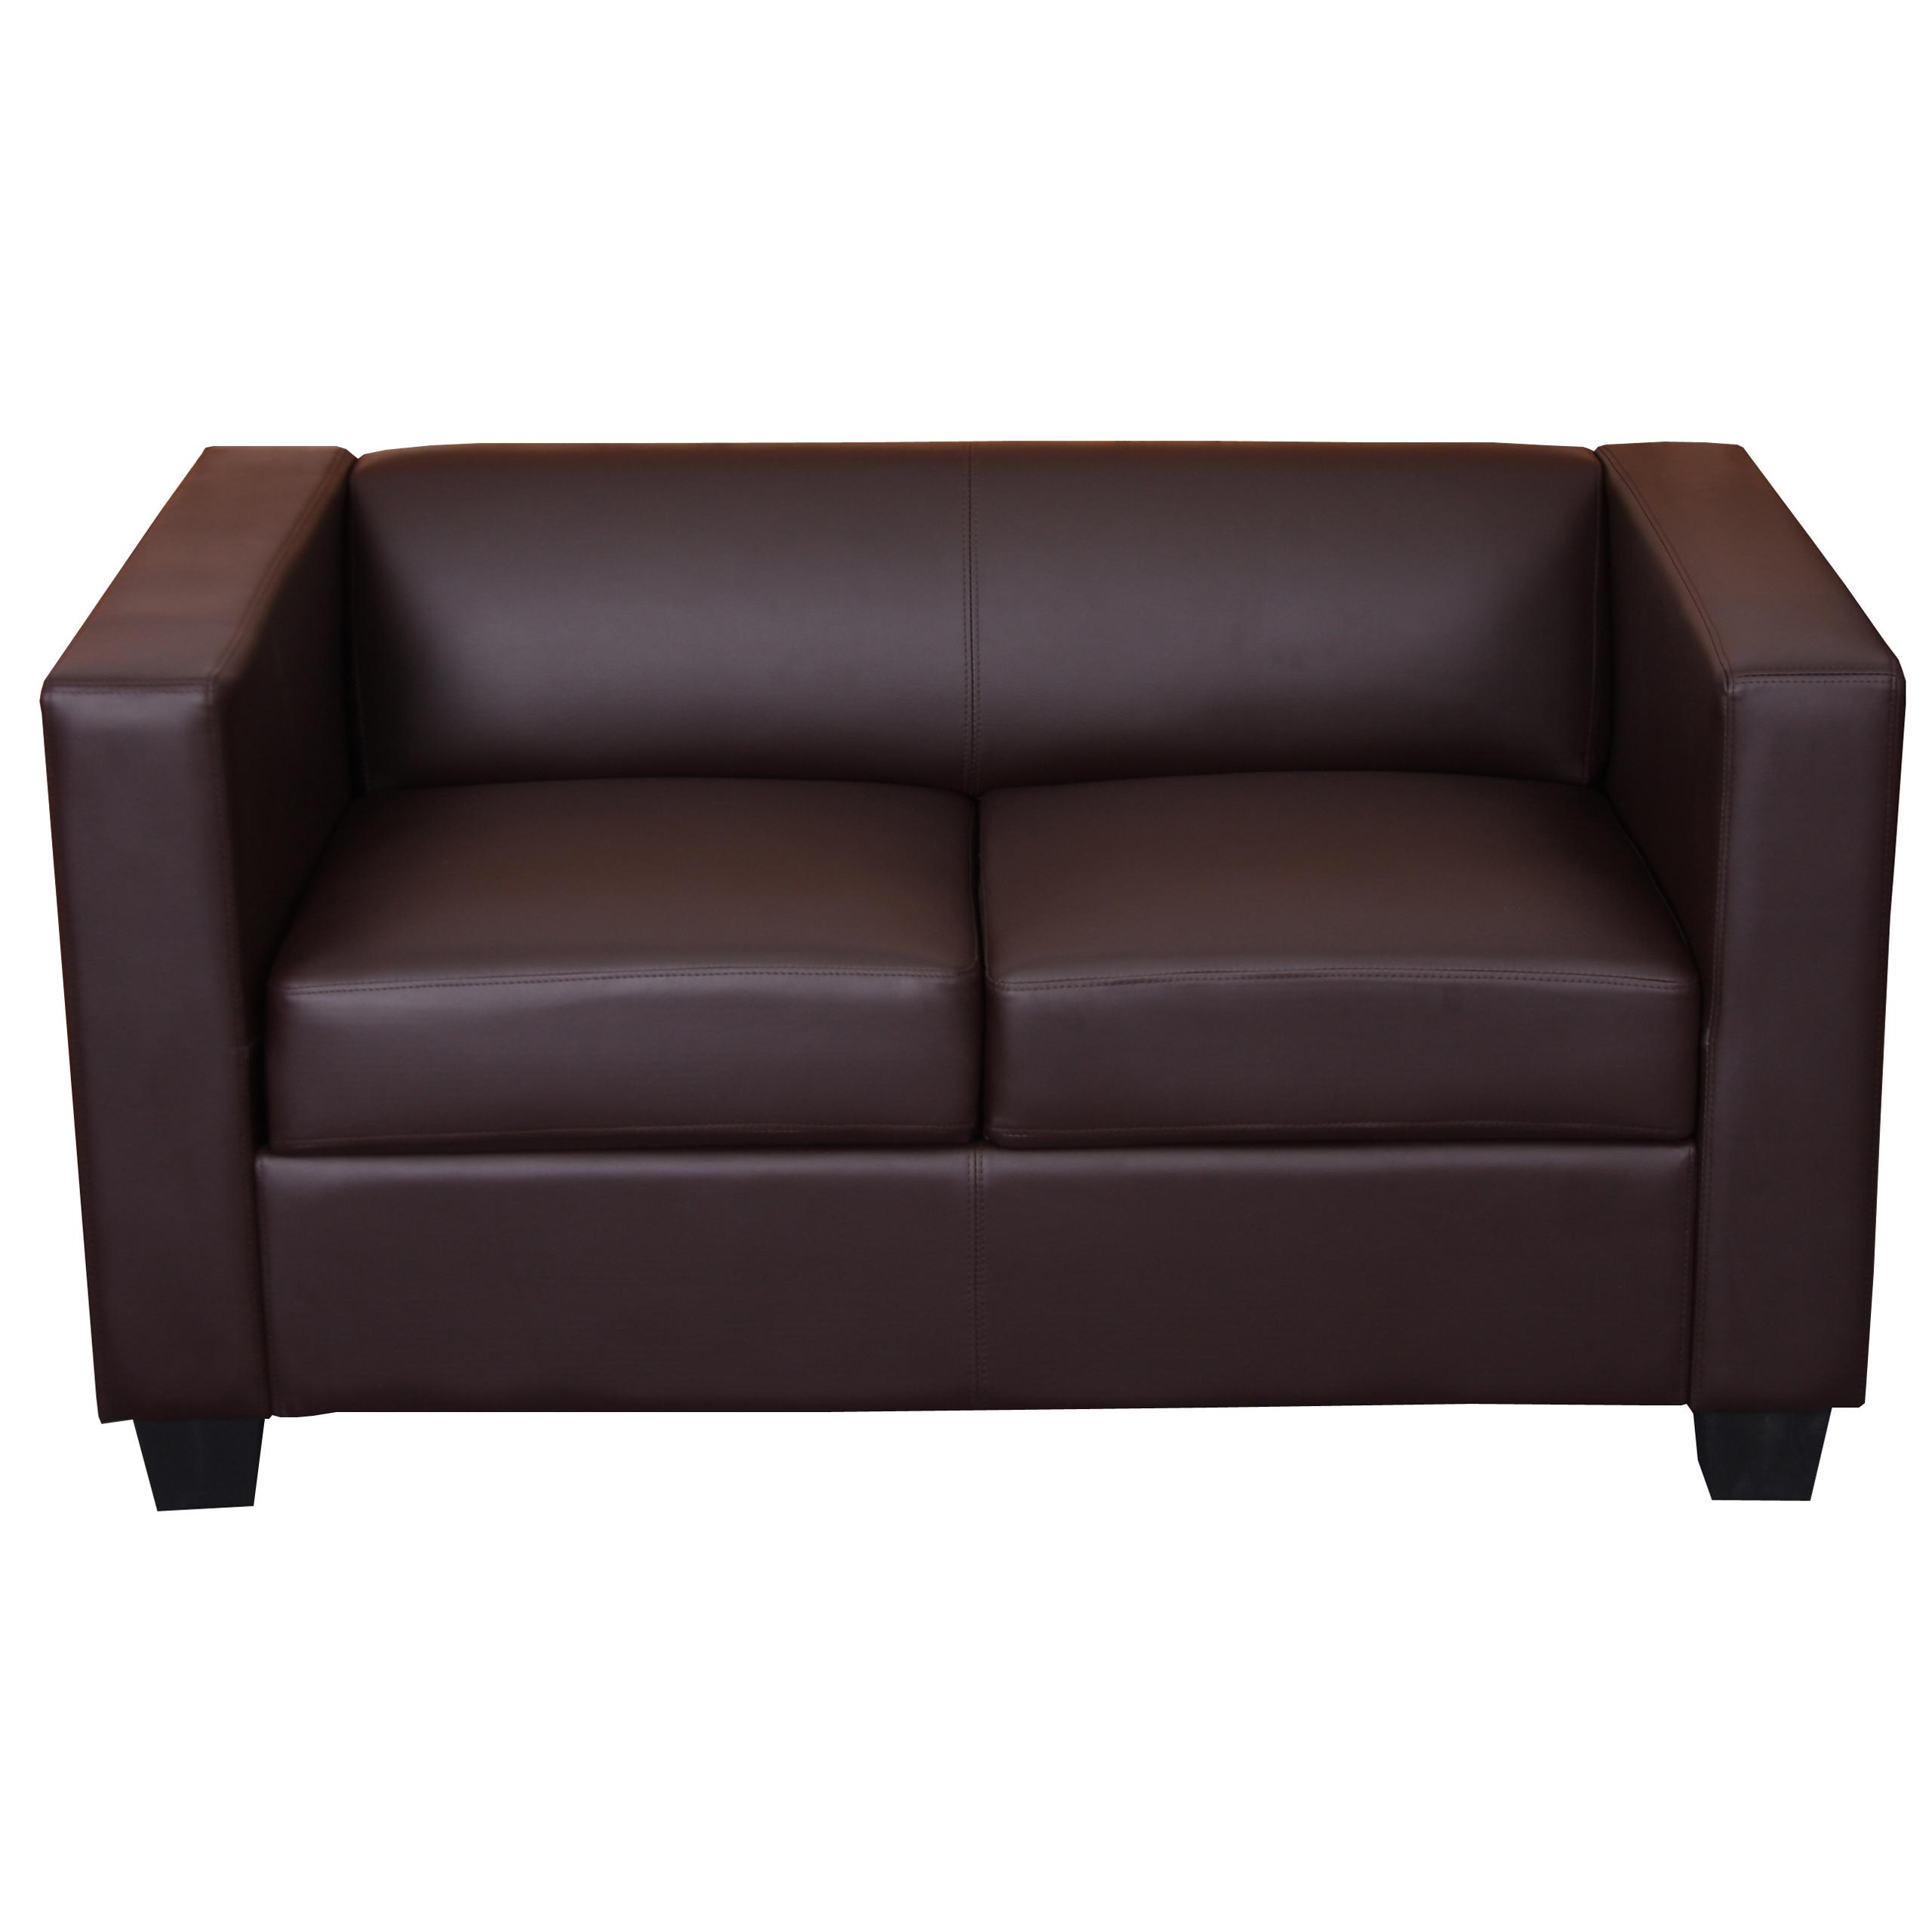 Sessel BASEL, Zweisitzer, elegantes Design, großer Komfort, Leder, Farbe Kaffeebraun